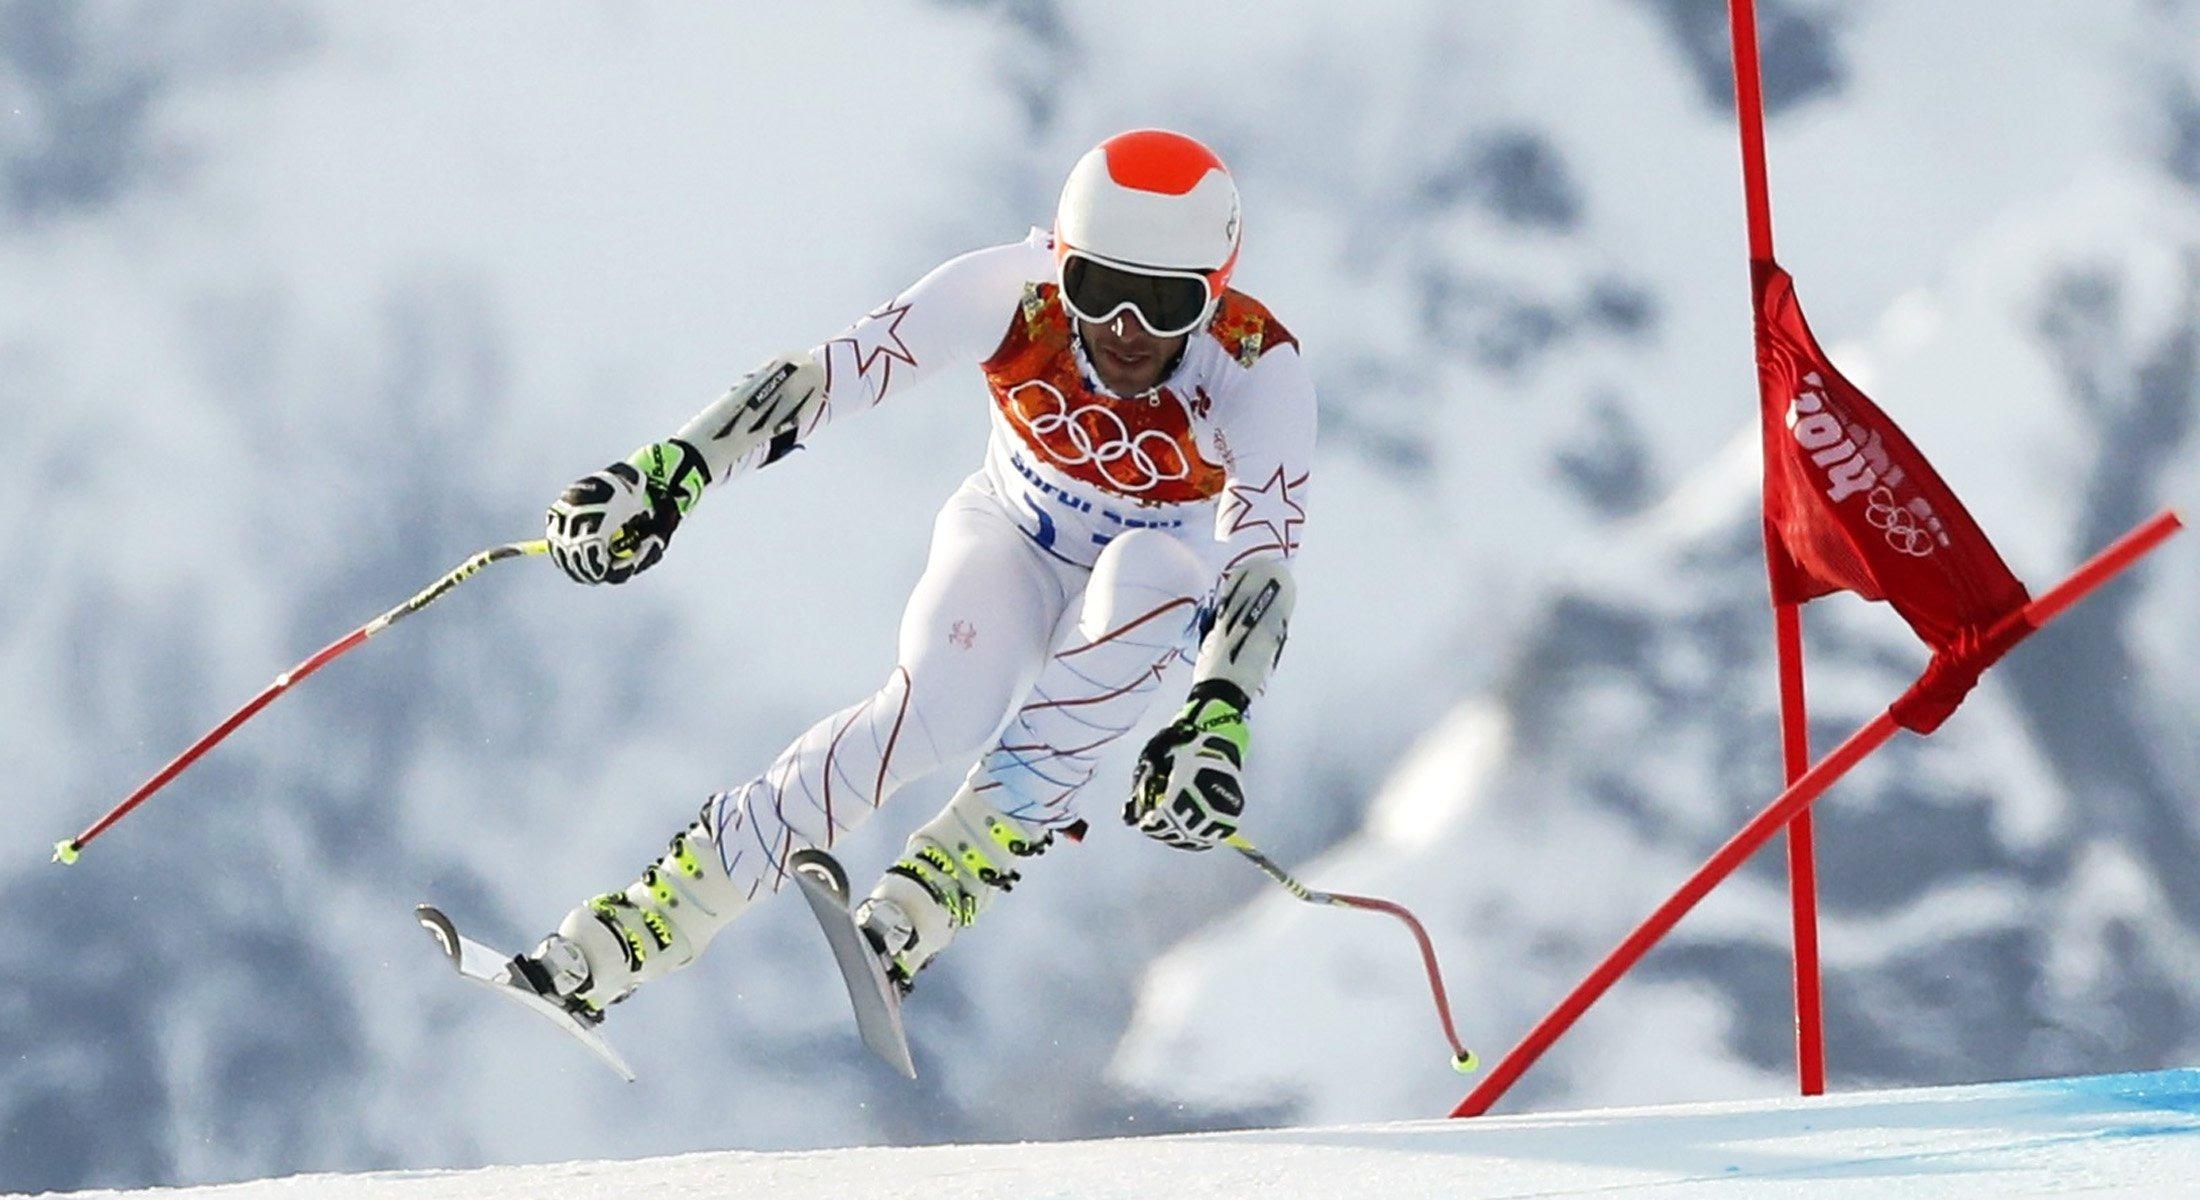 Ski racing, Skiing wallpapers, Winter sports, Speed and adrenaline, 2200x1200 HD Desktop